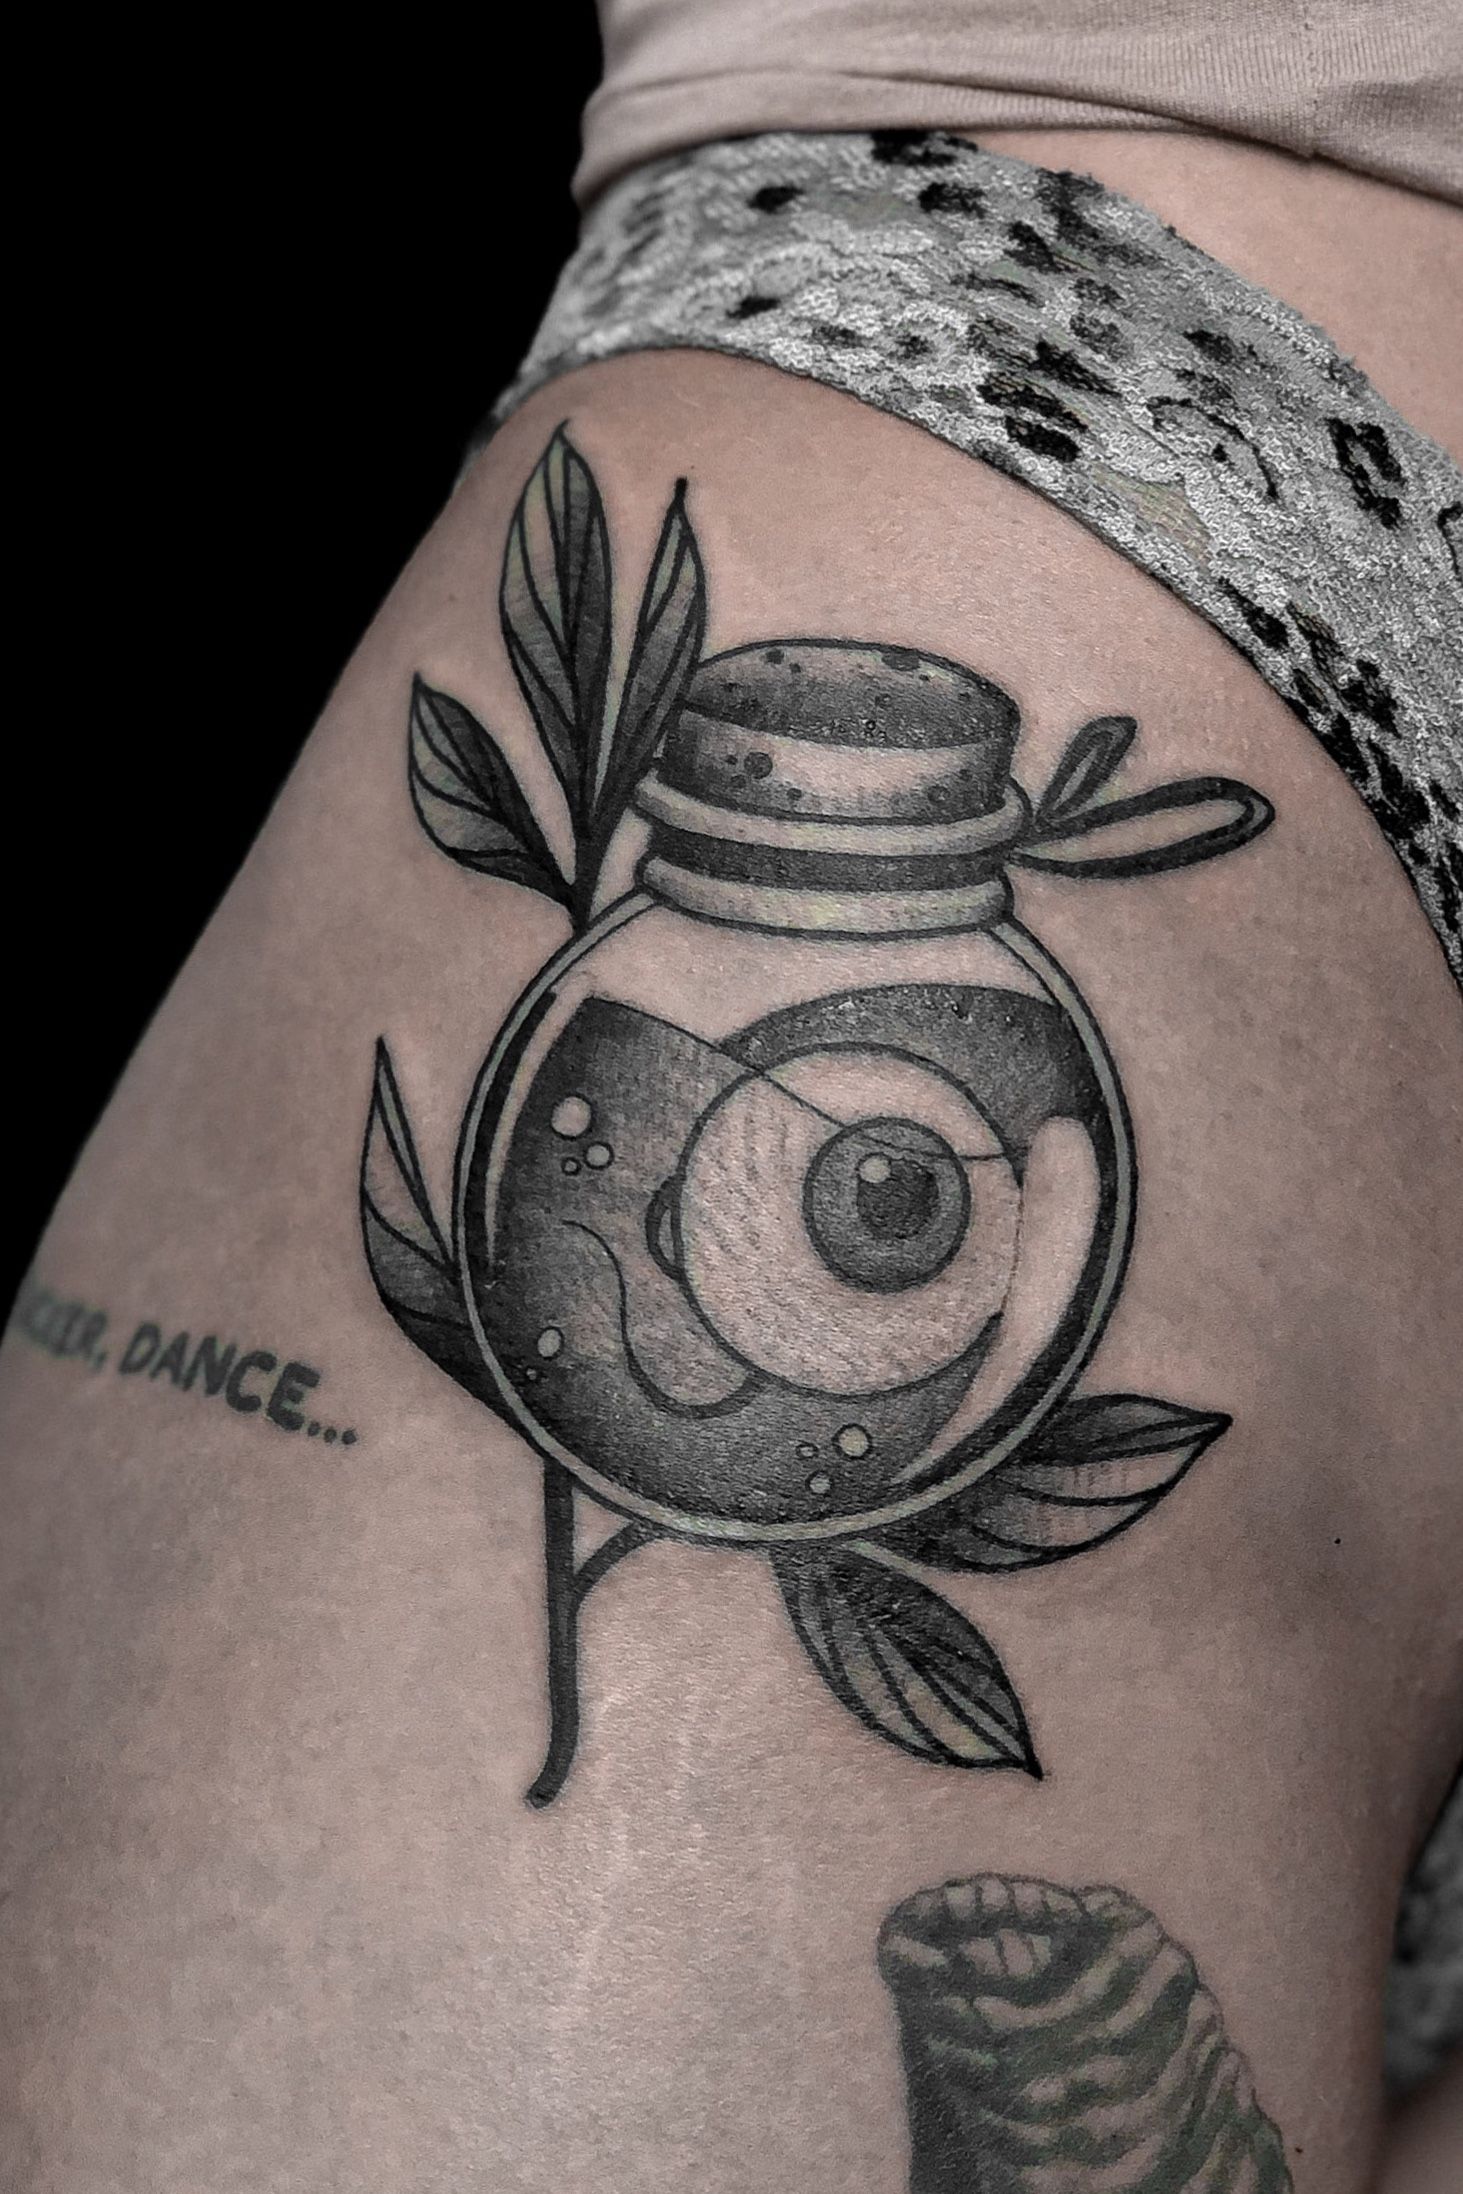 Third-Eye Tattoo Ideas | POPSUGAR Beauty